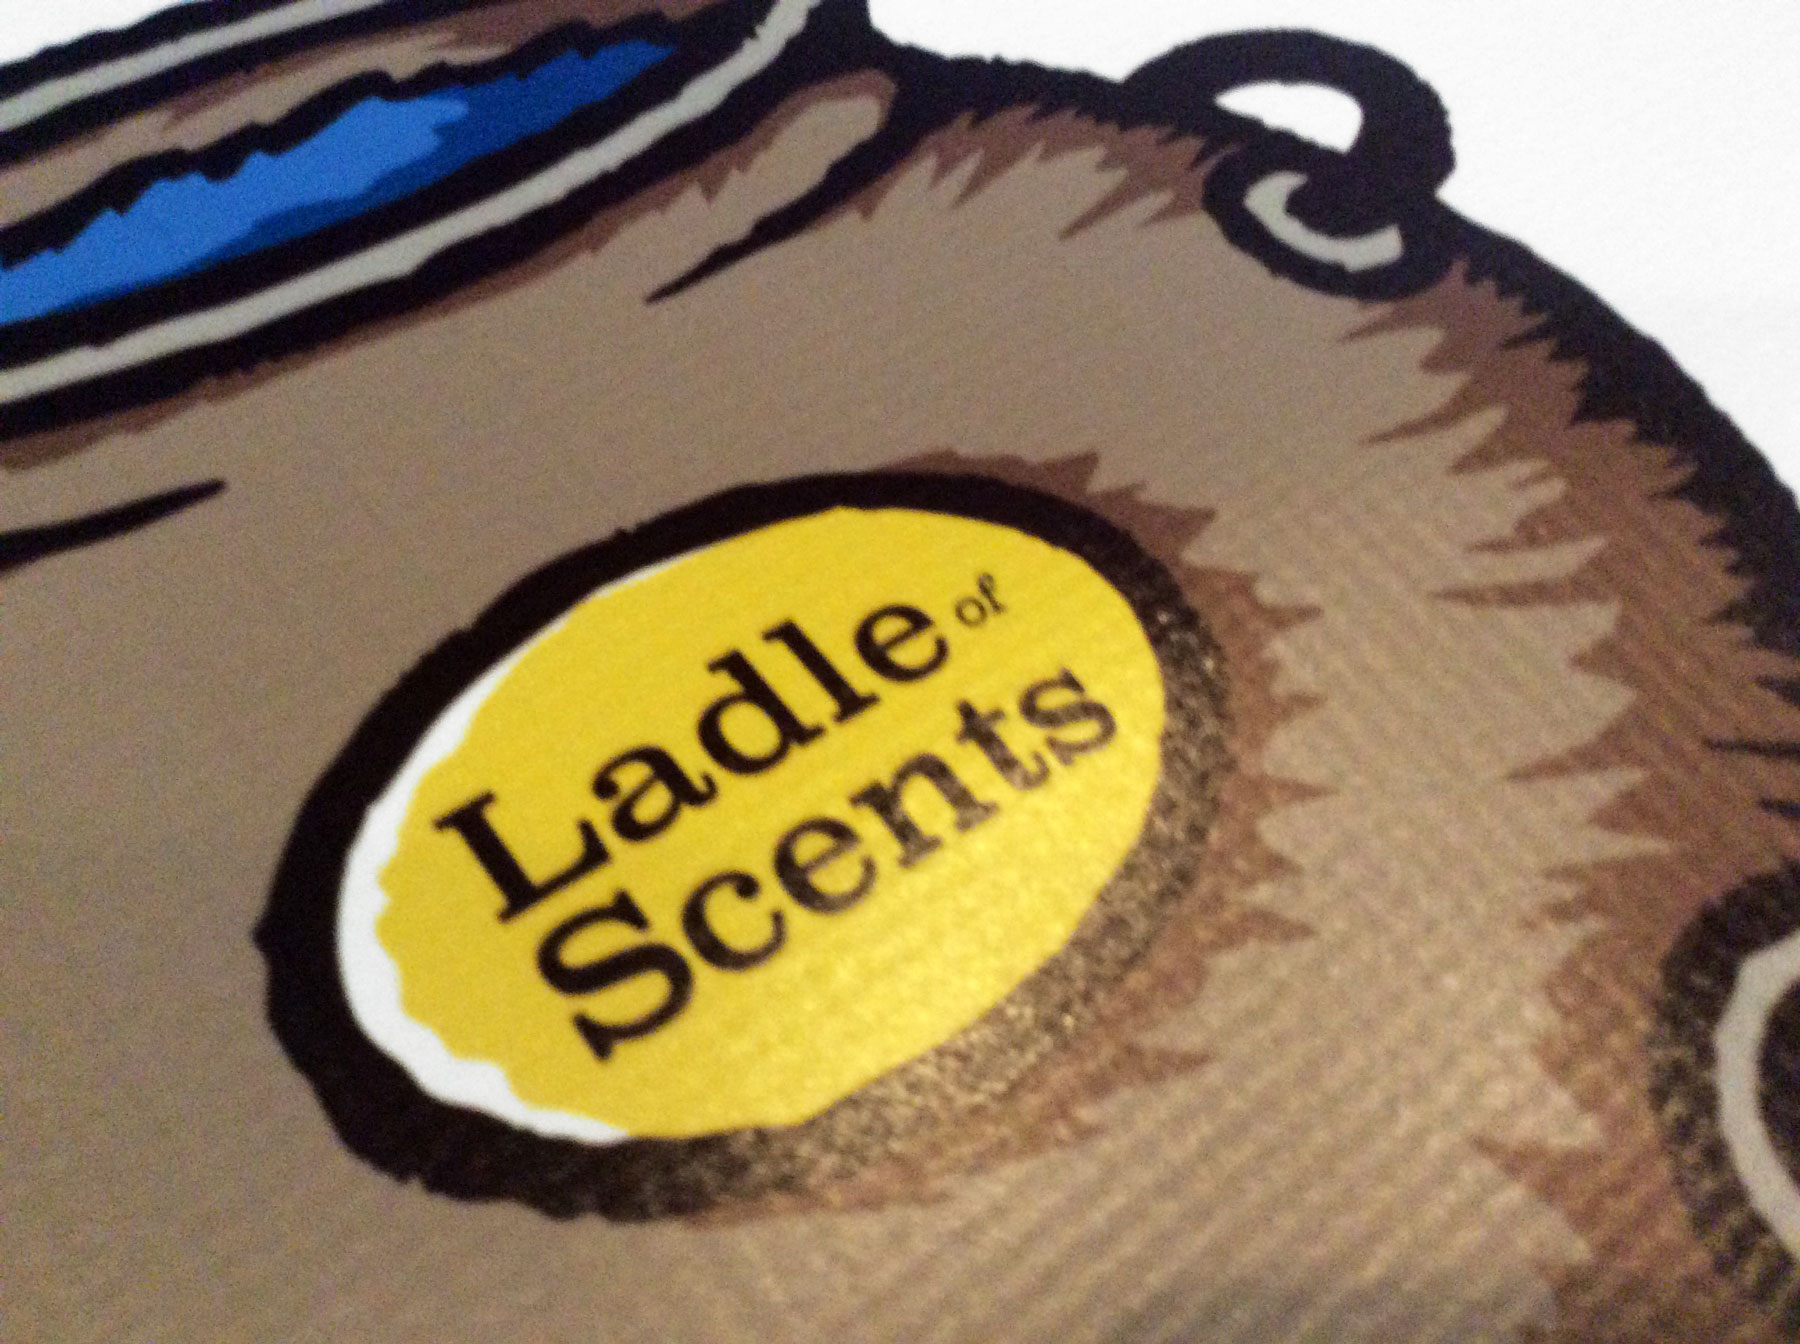 New Vinyl Banner: Ladle of Scents 04